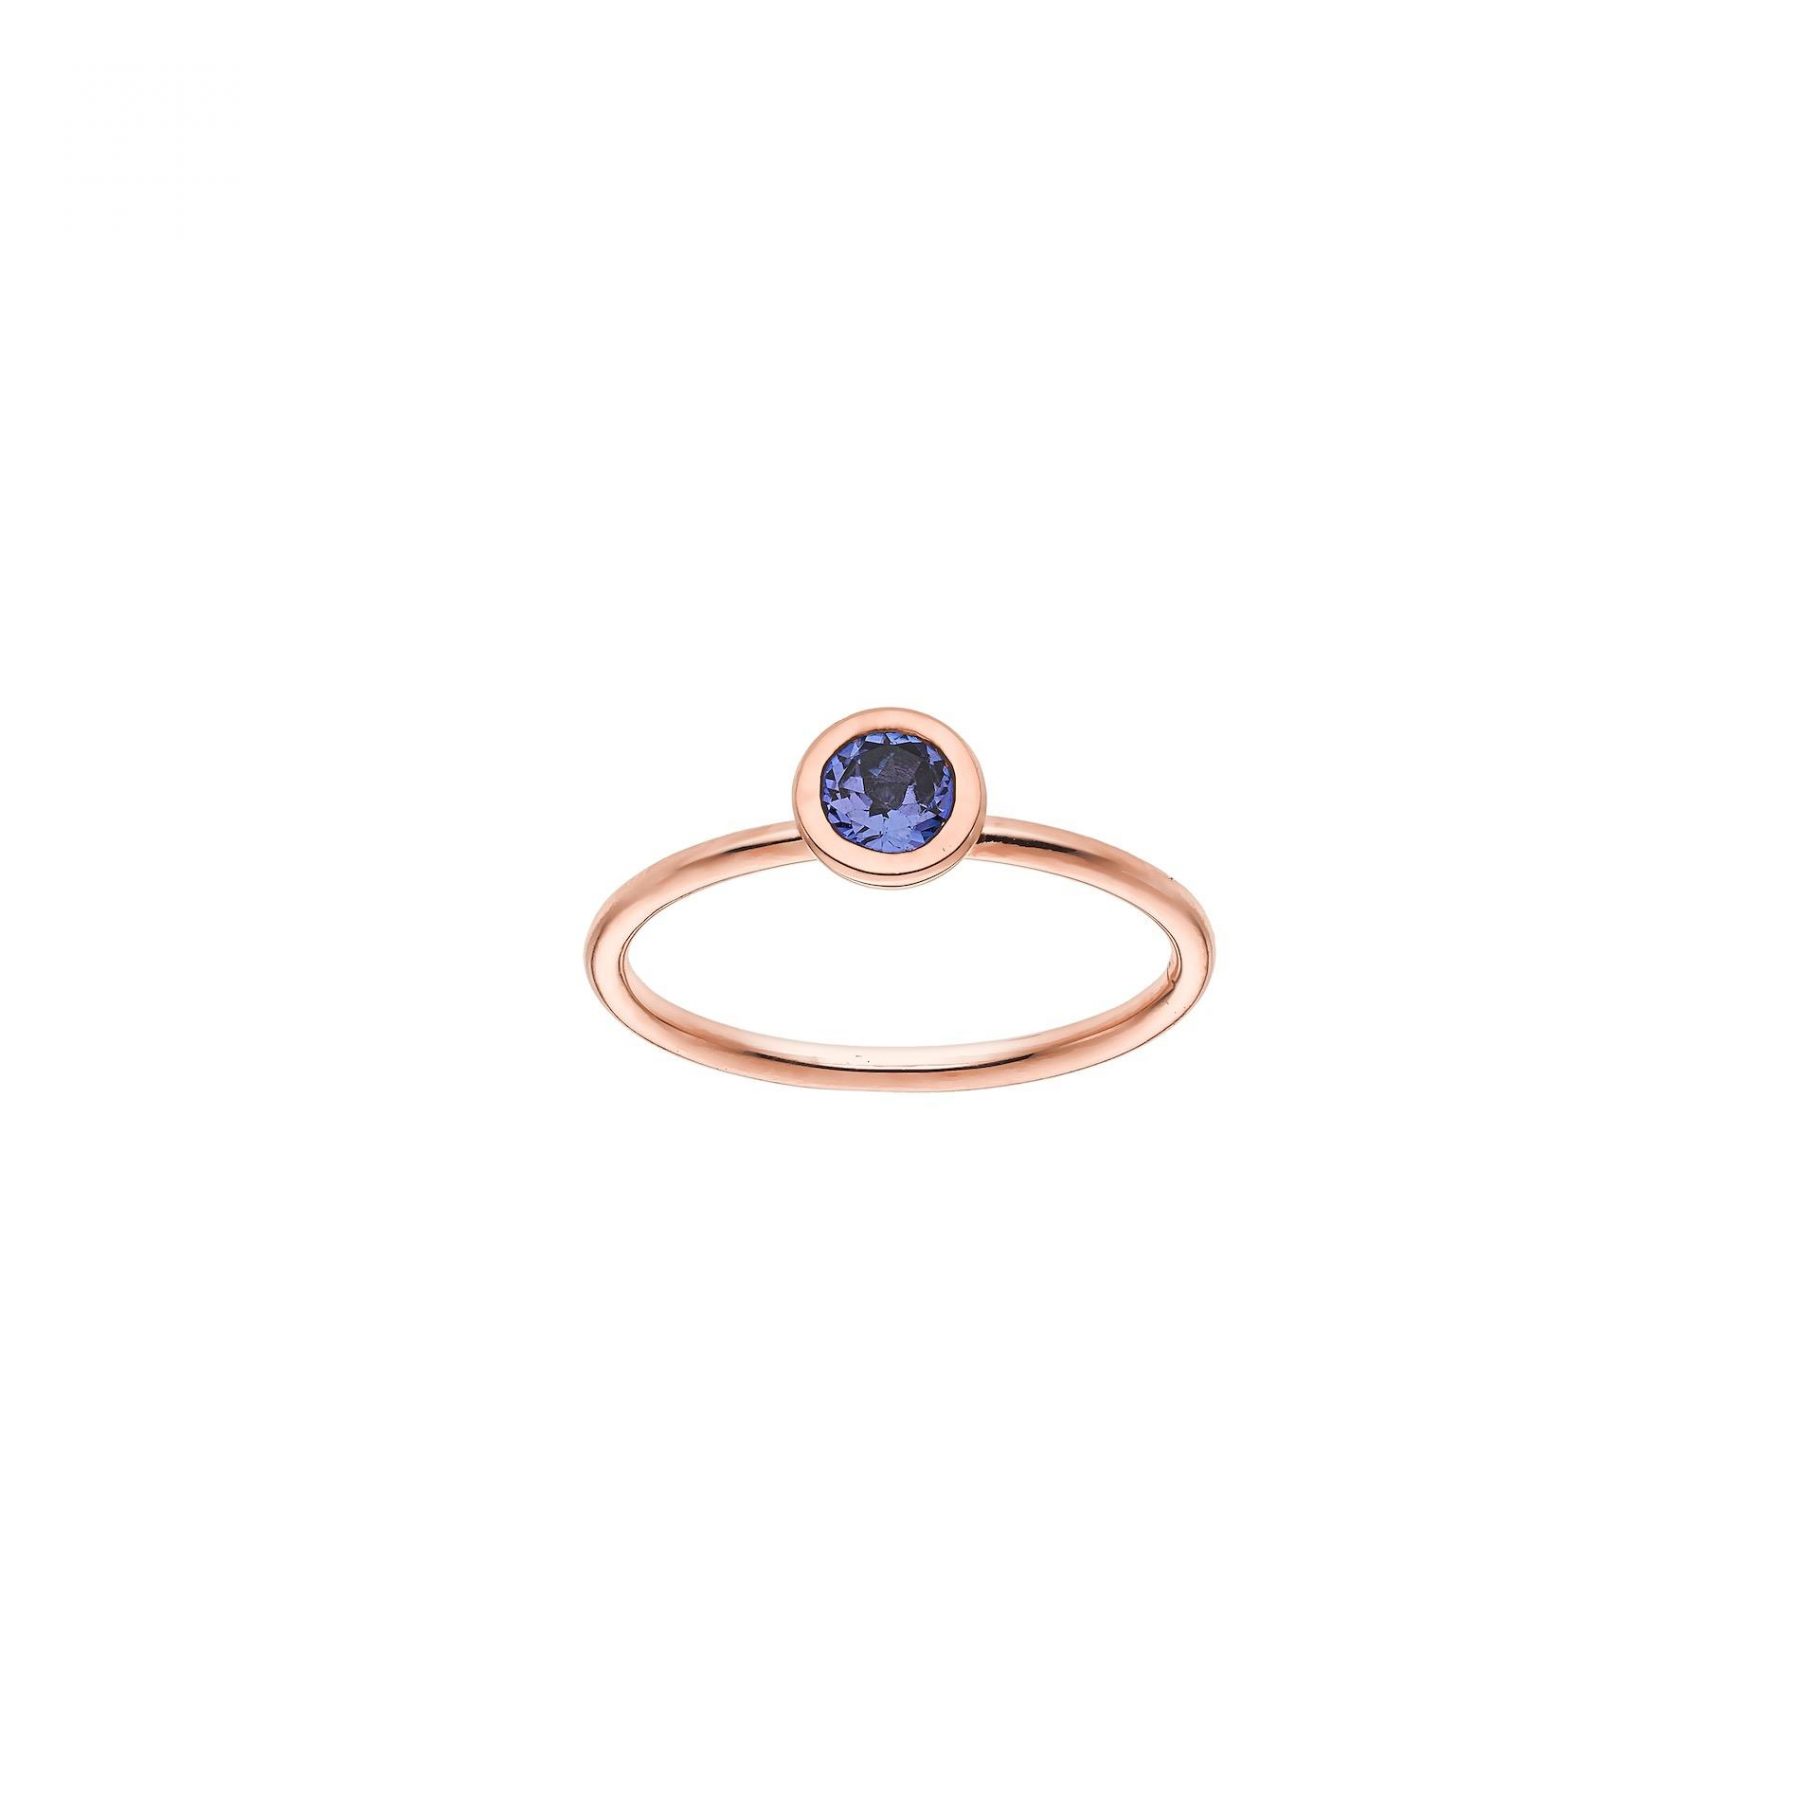 Ring Saphir blau 18kt Rosegold - Lefteris Margaritis - RGS005saph